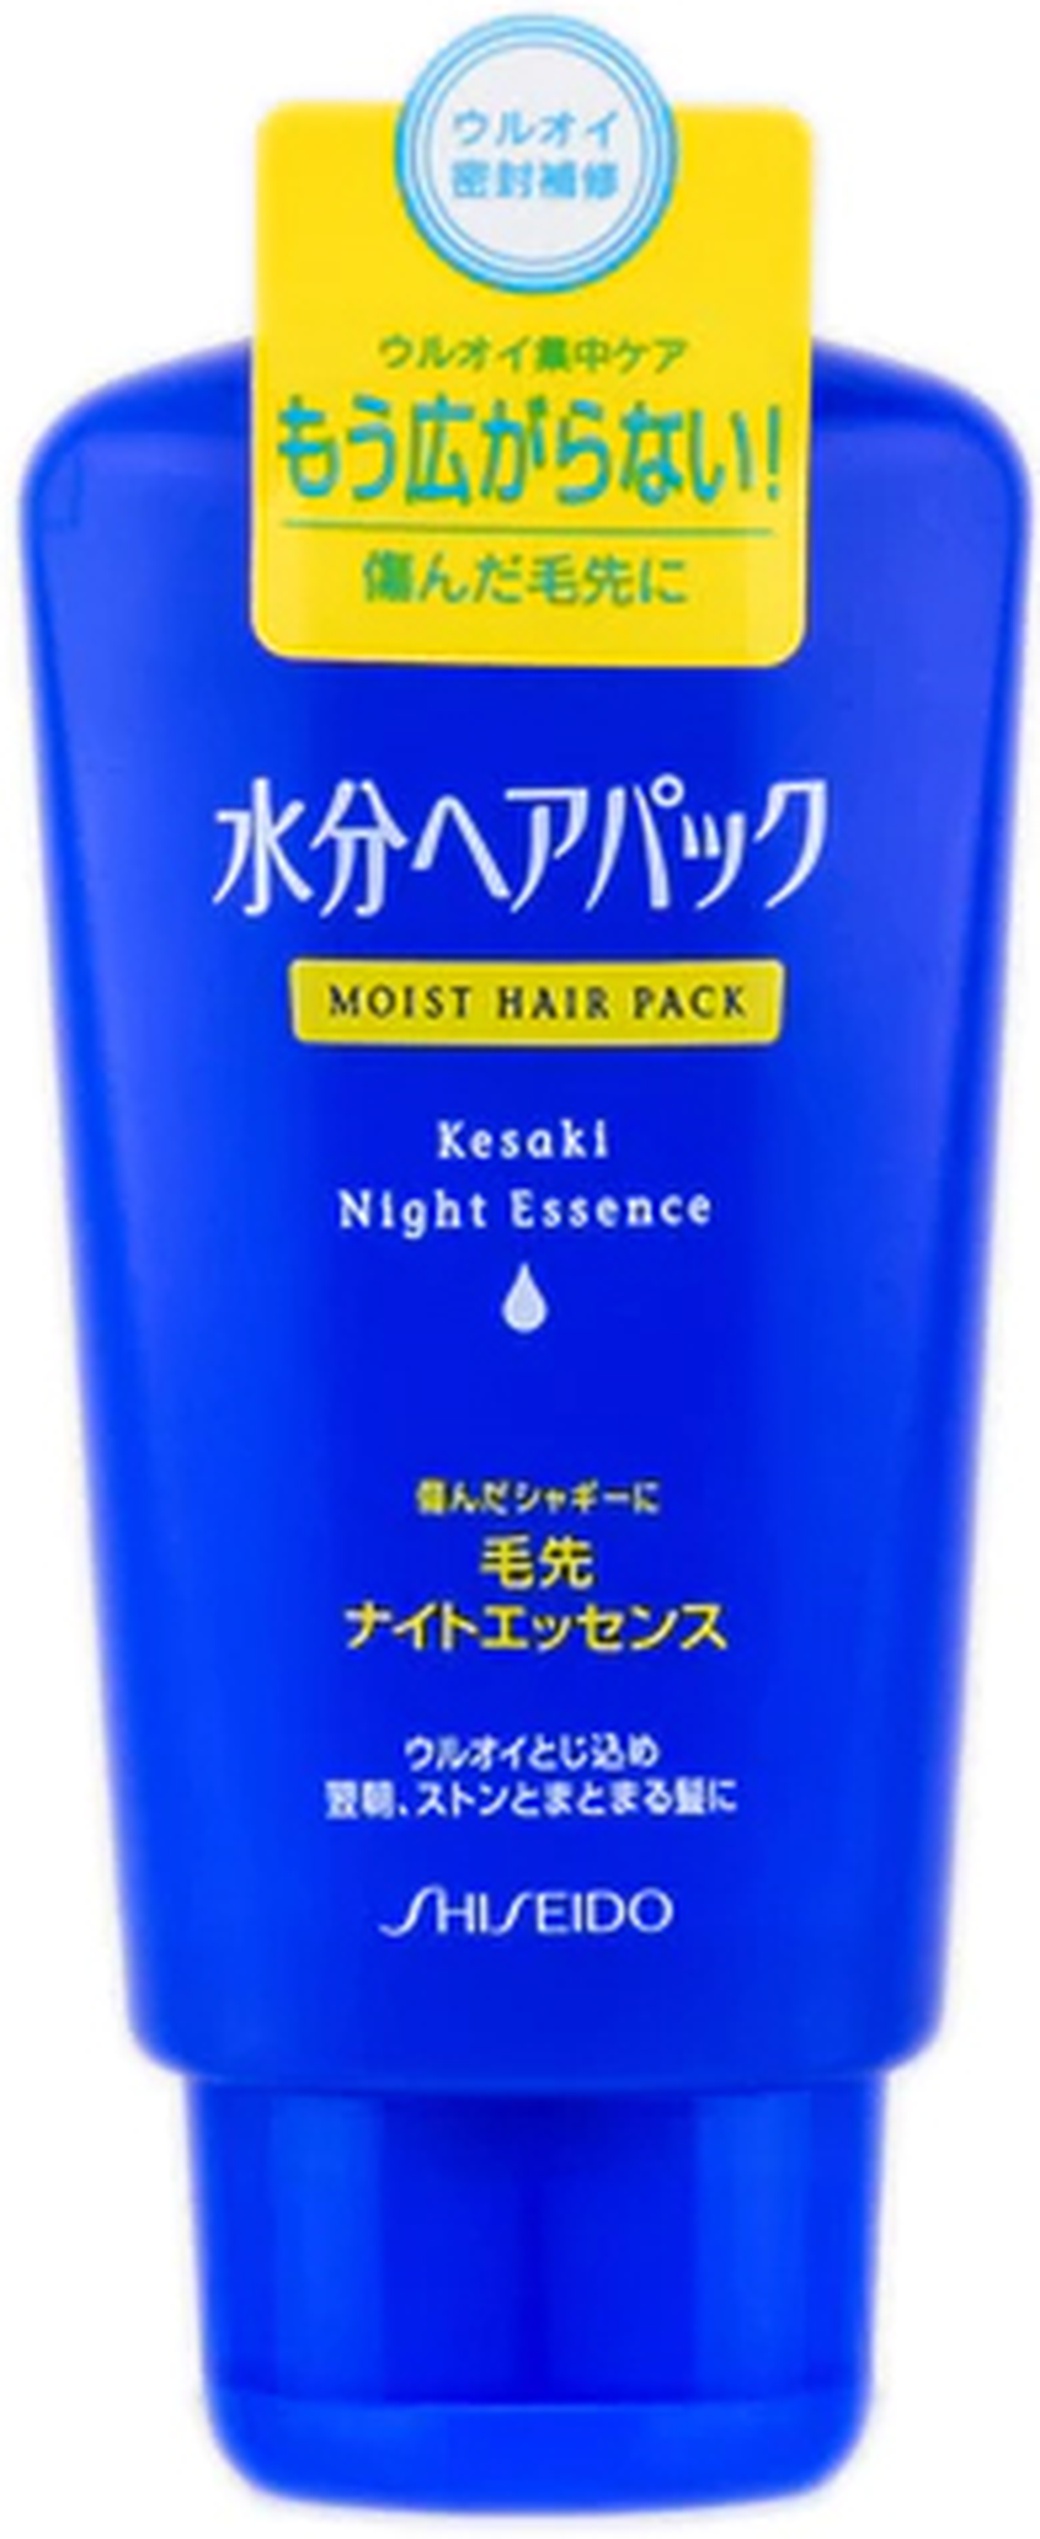 Shiseido "Moist hair pack" Увлажняющая ночная эссенция для поврежденных волос, 120 г фото